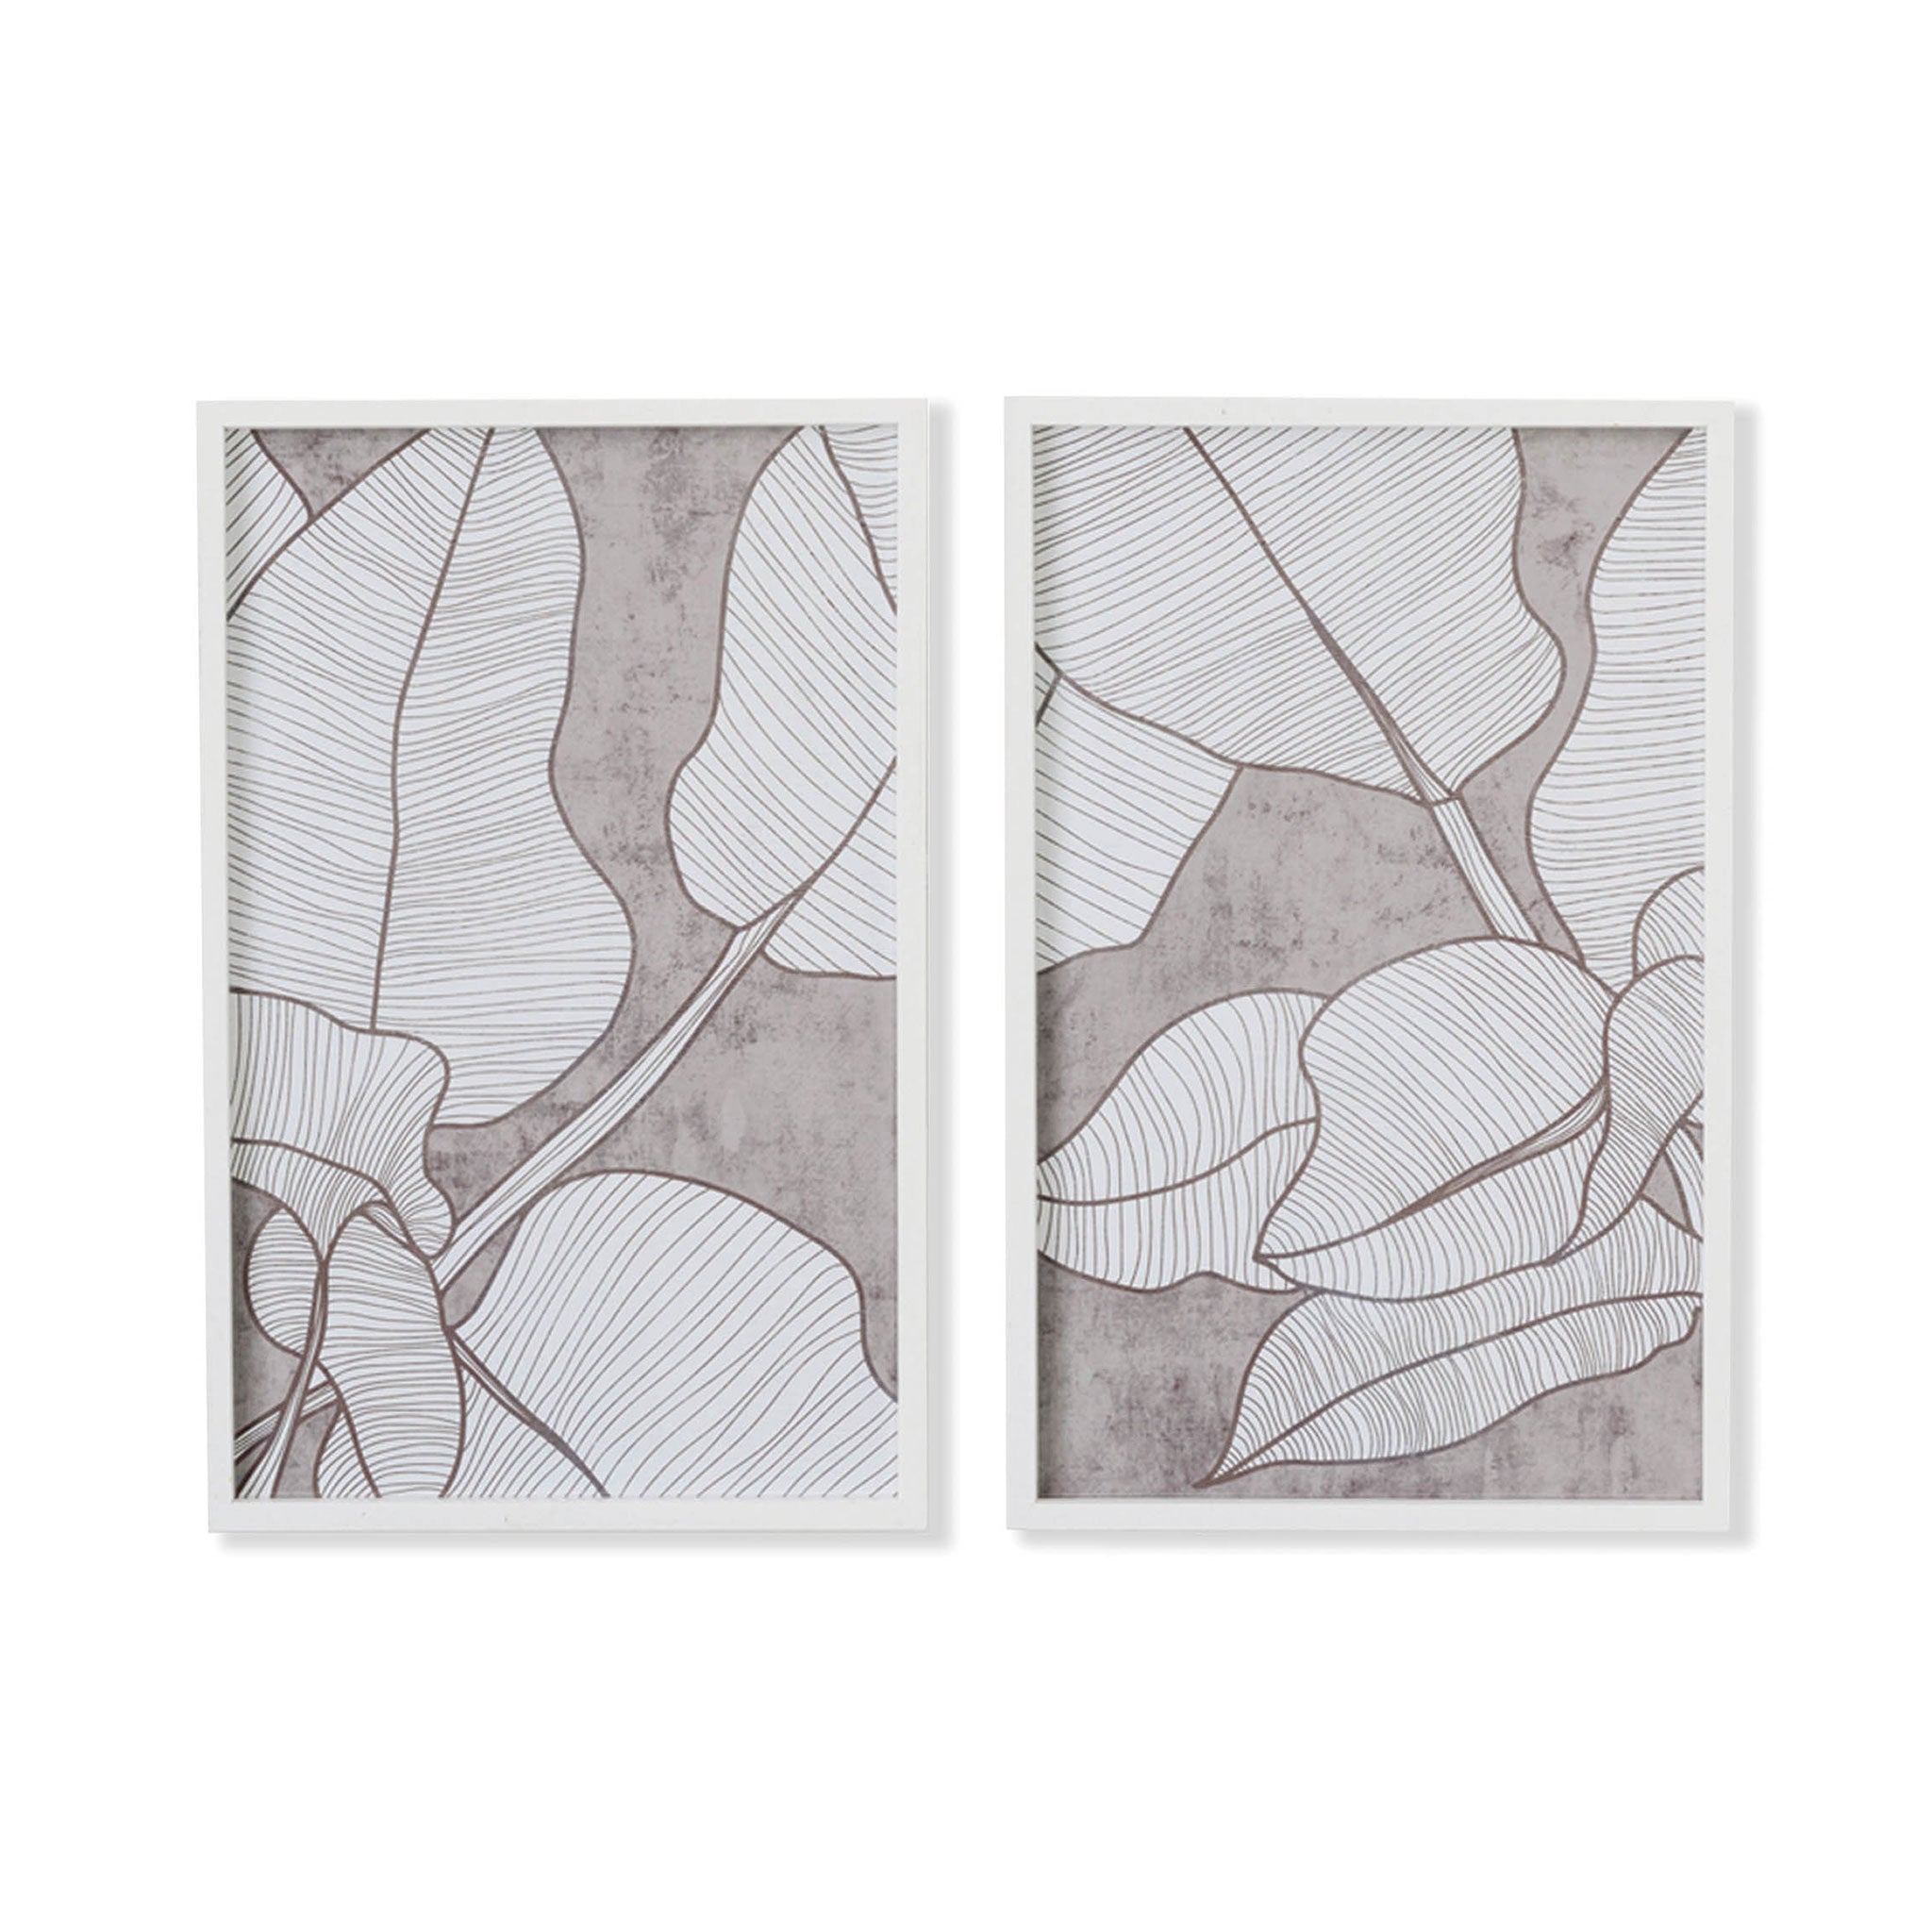 Philomene Leaf Prints, set of 2